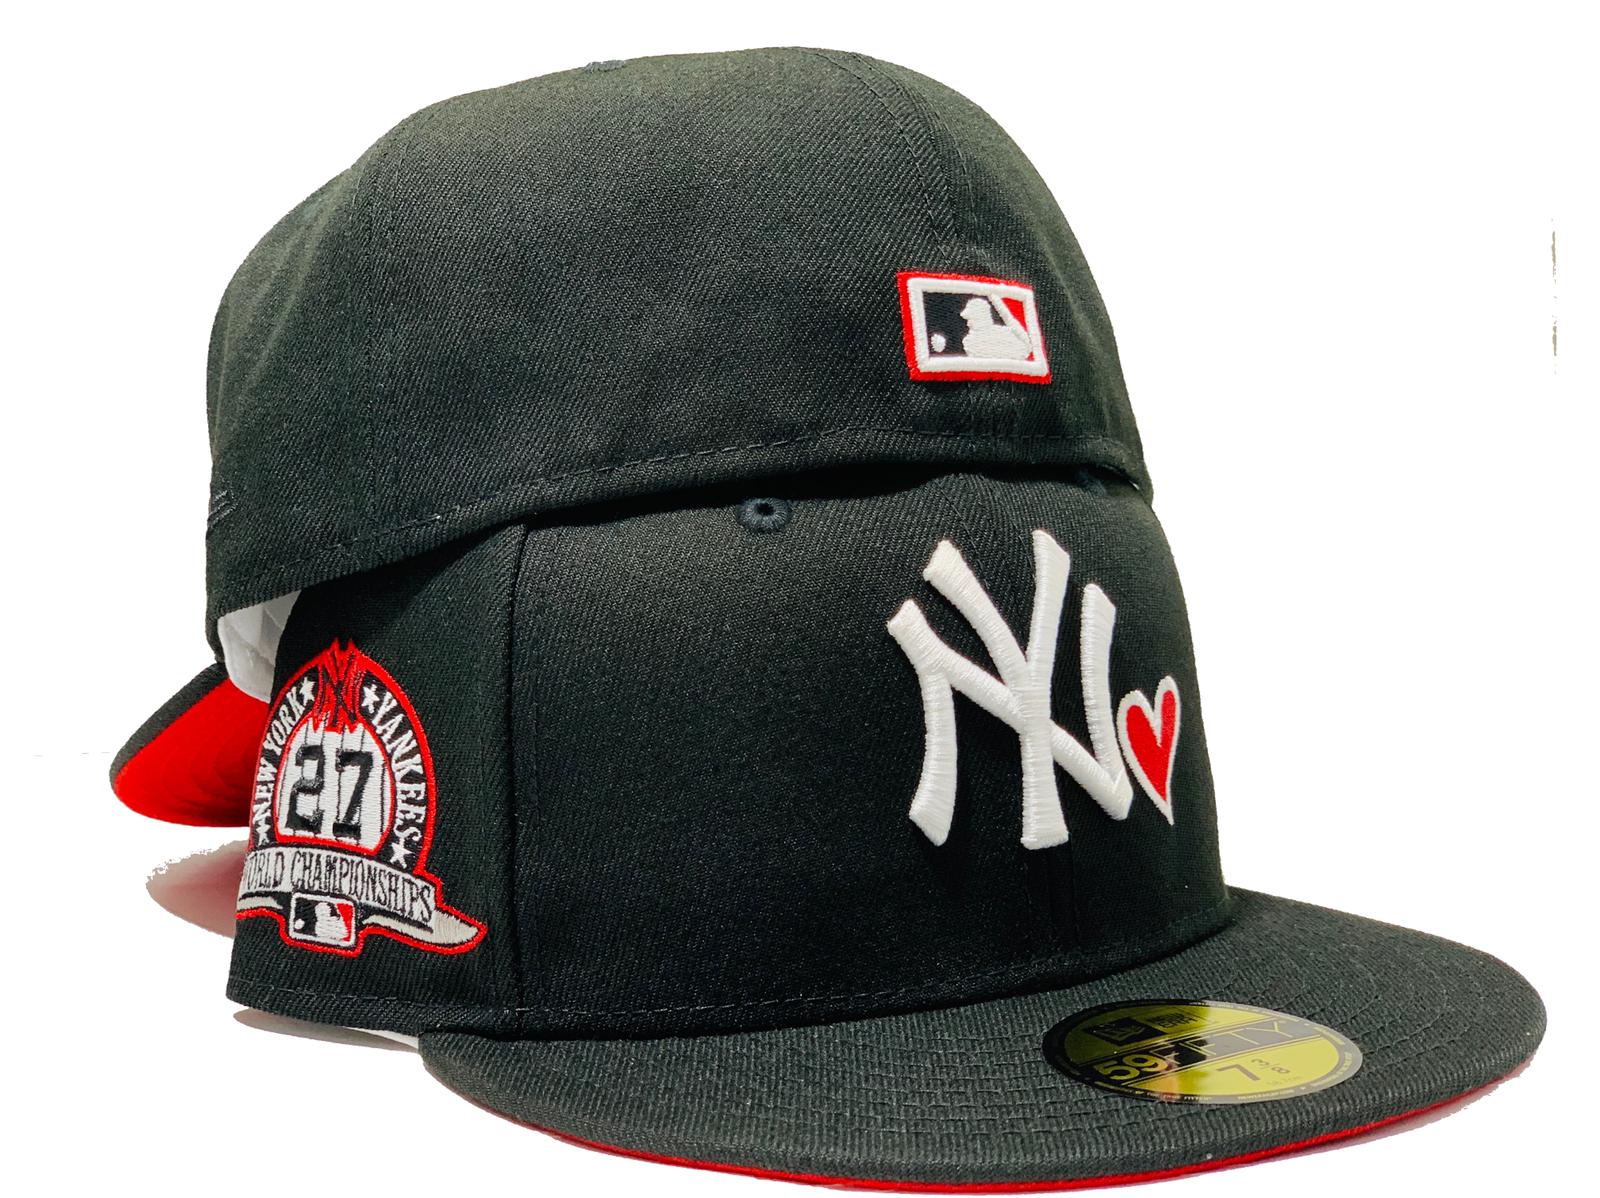 New York Black Yankees Rings & Crwns Team Fitted Hat - Cream/Black